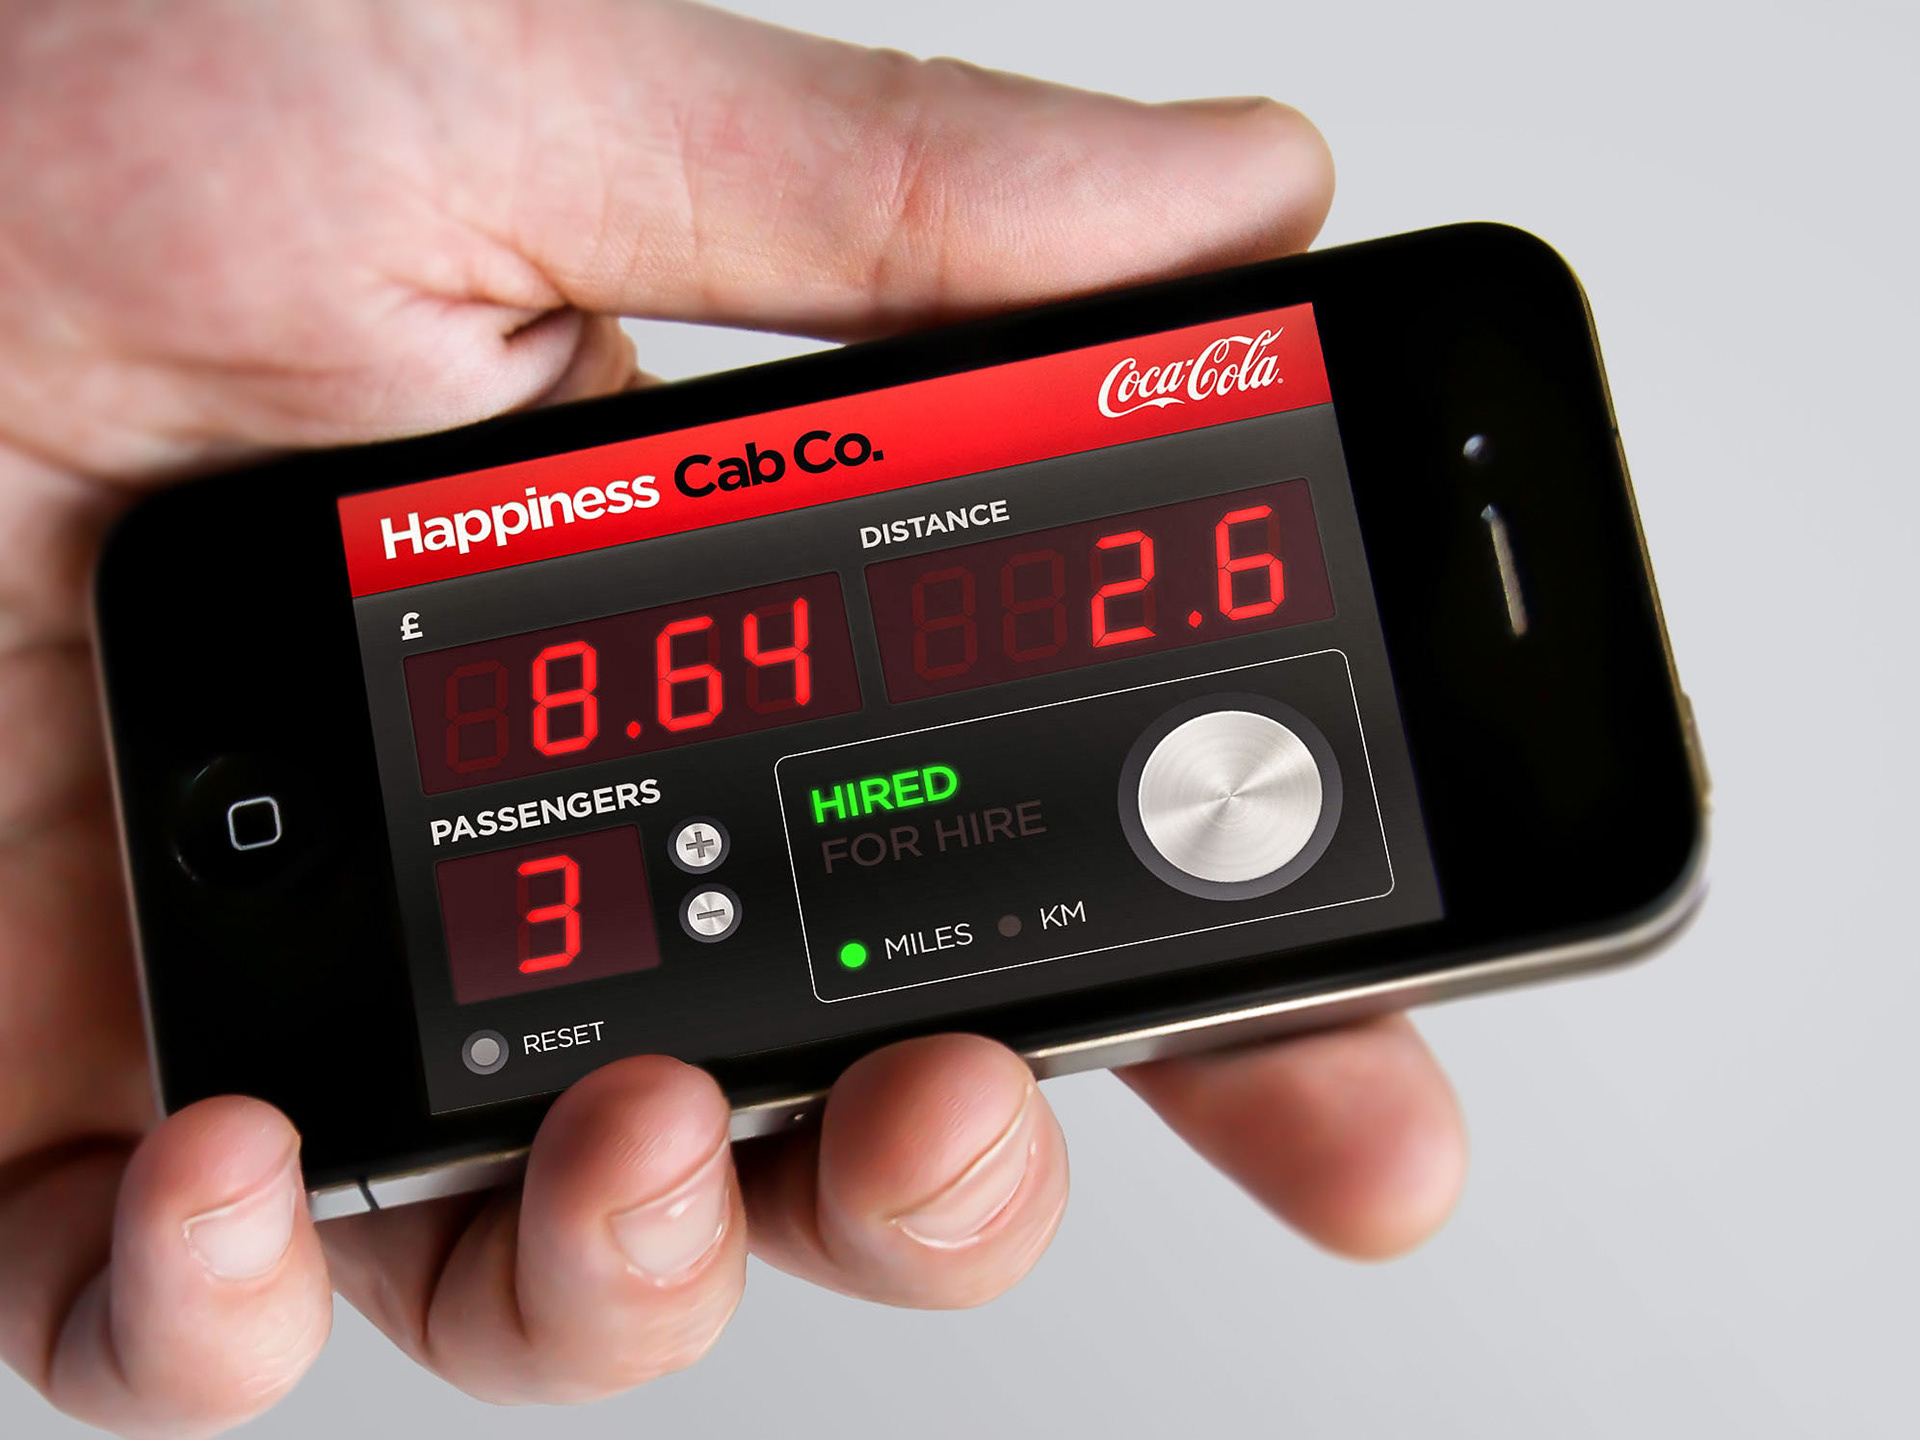 Jack Cole Coca Cola Happiness Cab Co